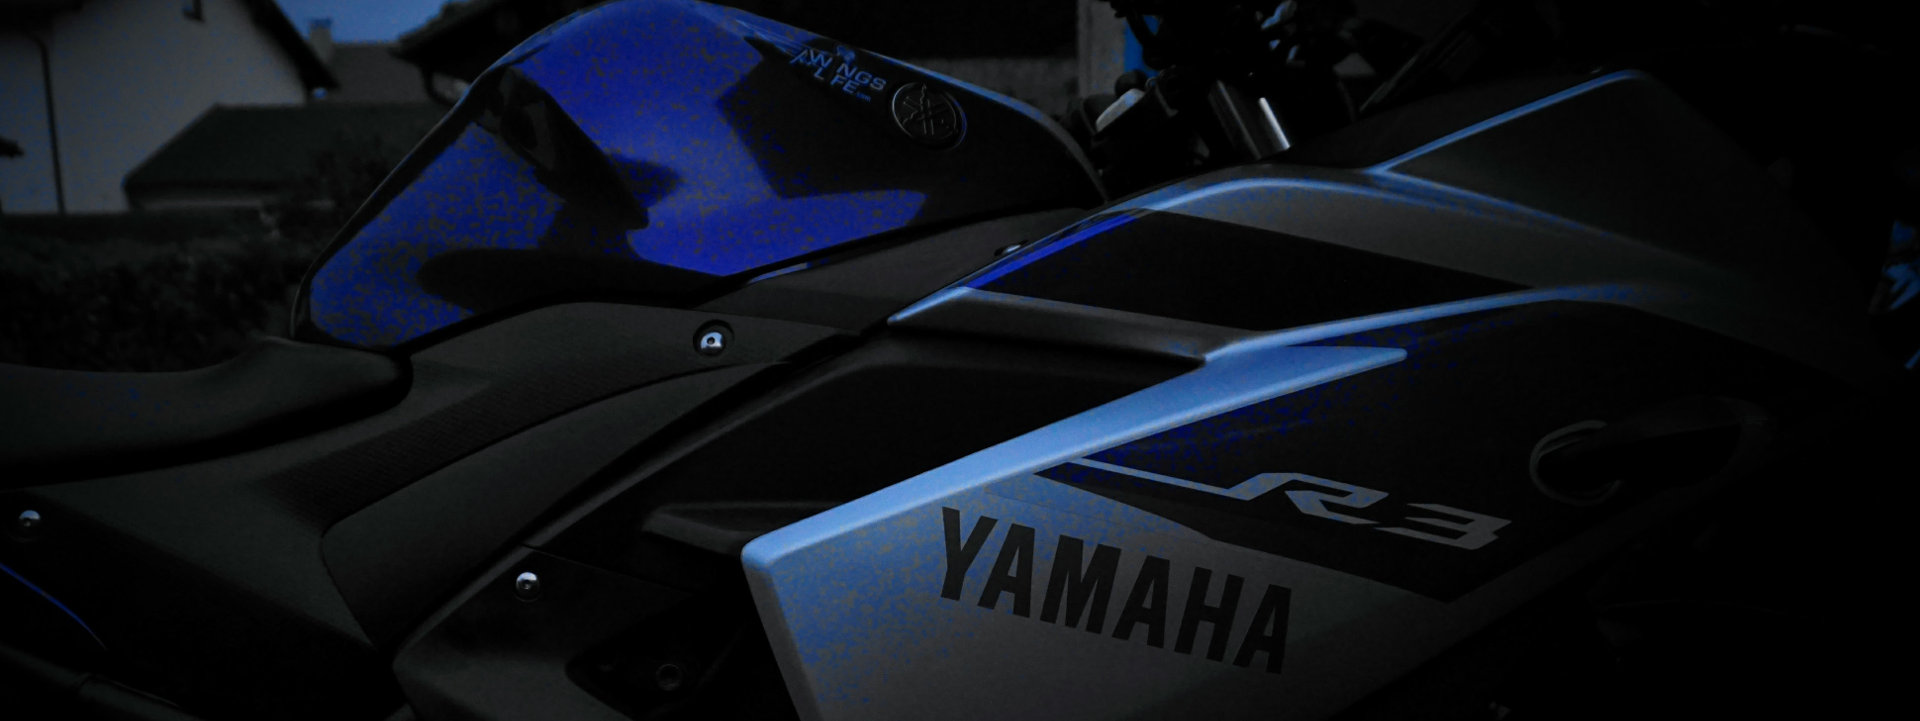 Yamaha YZF-R3 - garagenhomepage.de